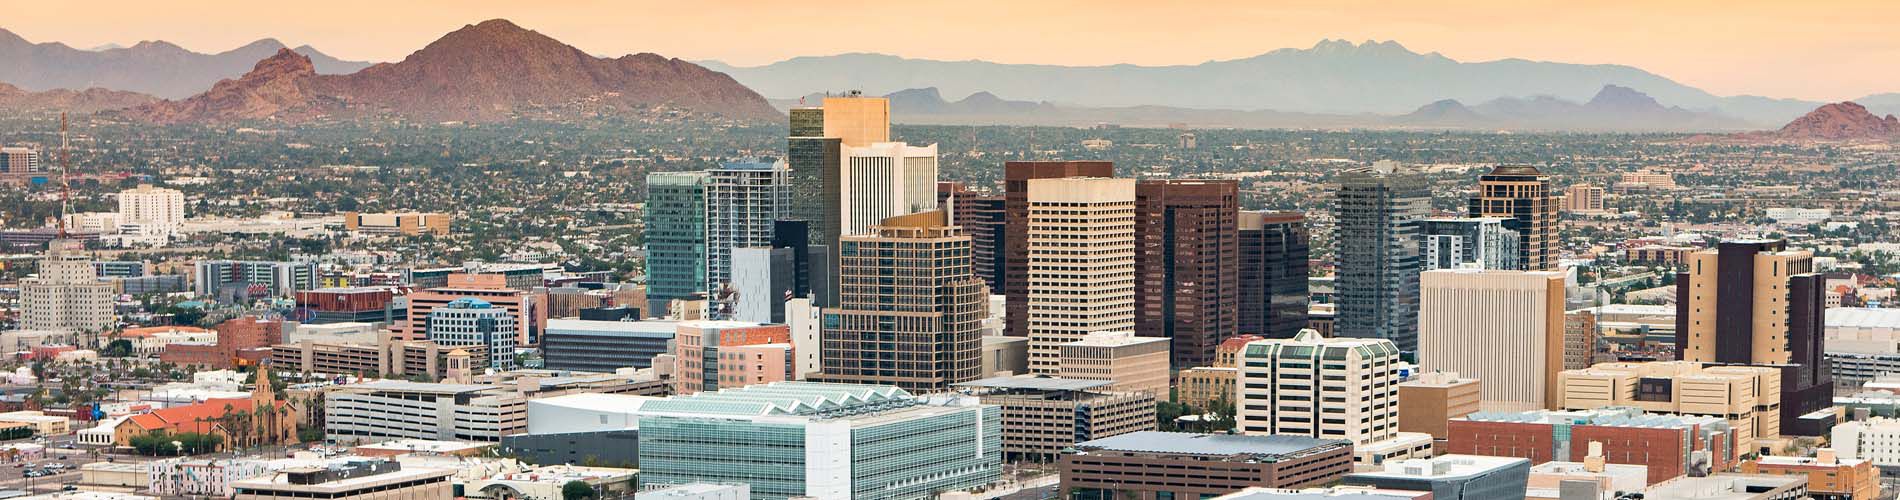 A skyline image of Downtown Phoenix.